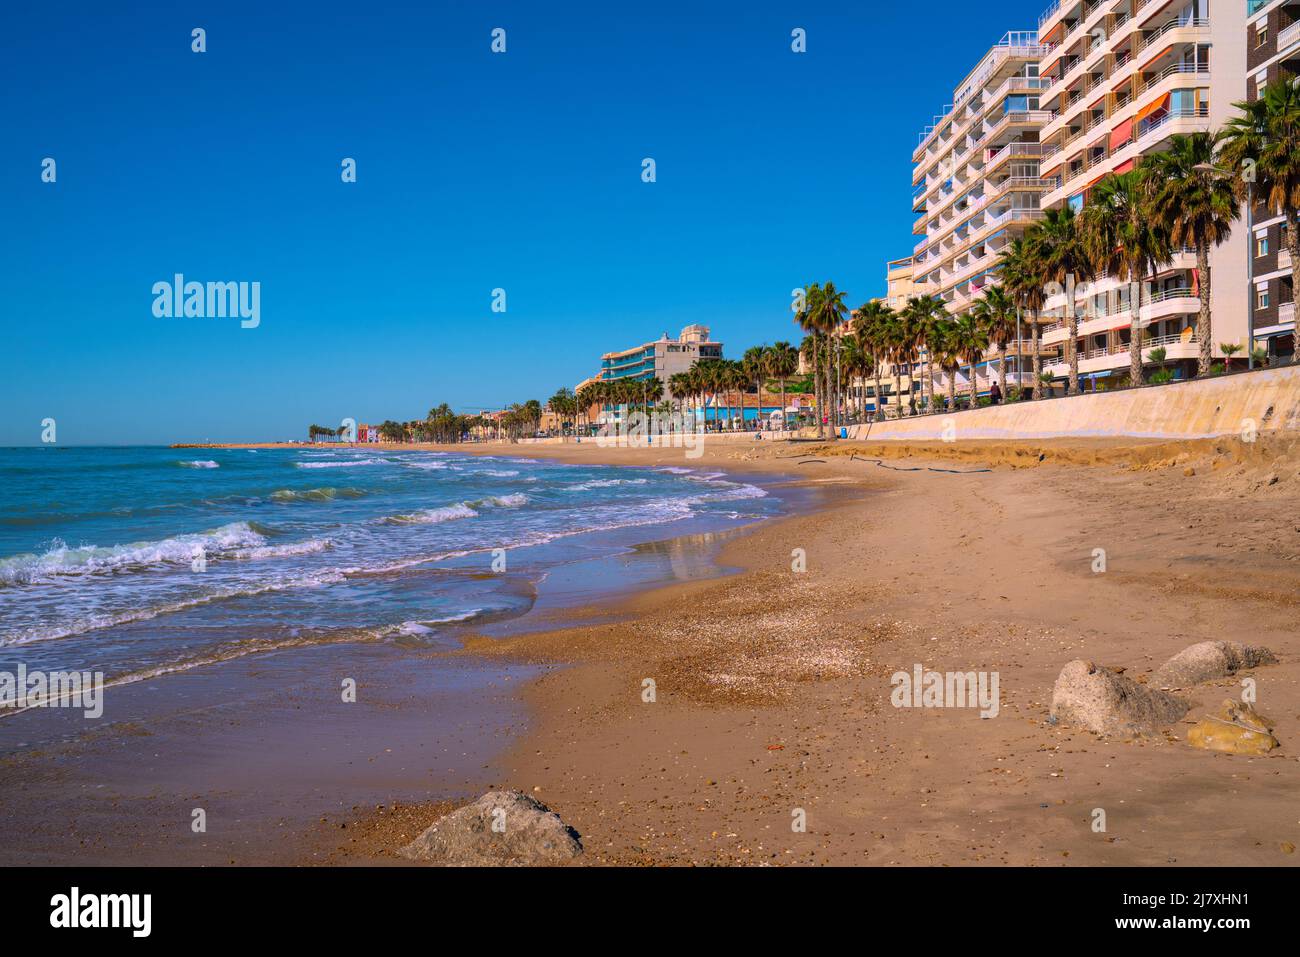 Villajoyosa Spain beach sand sea and palm trees Costa Blanca Alicante Stock Photo